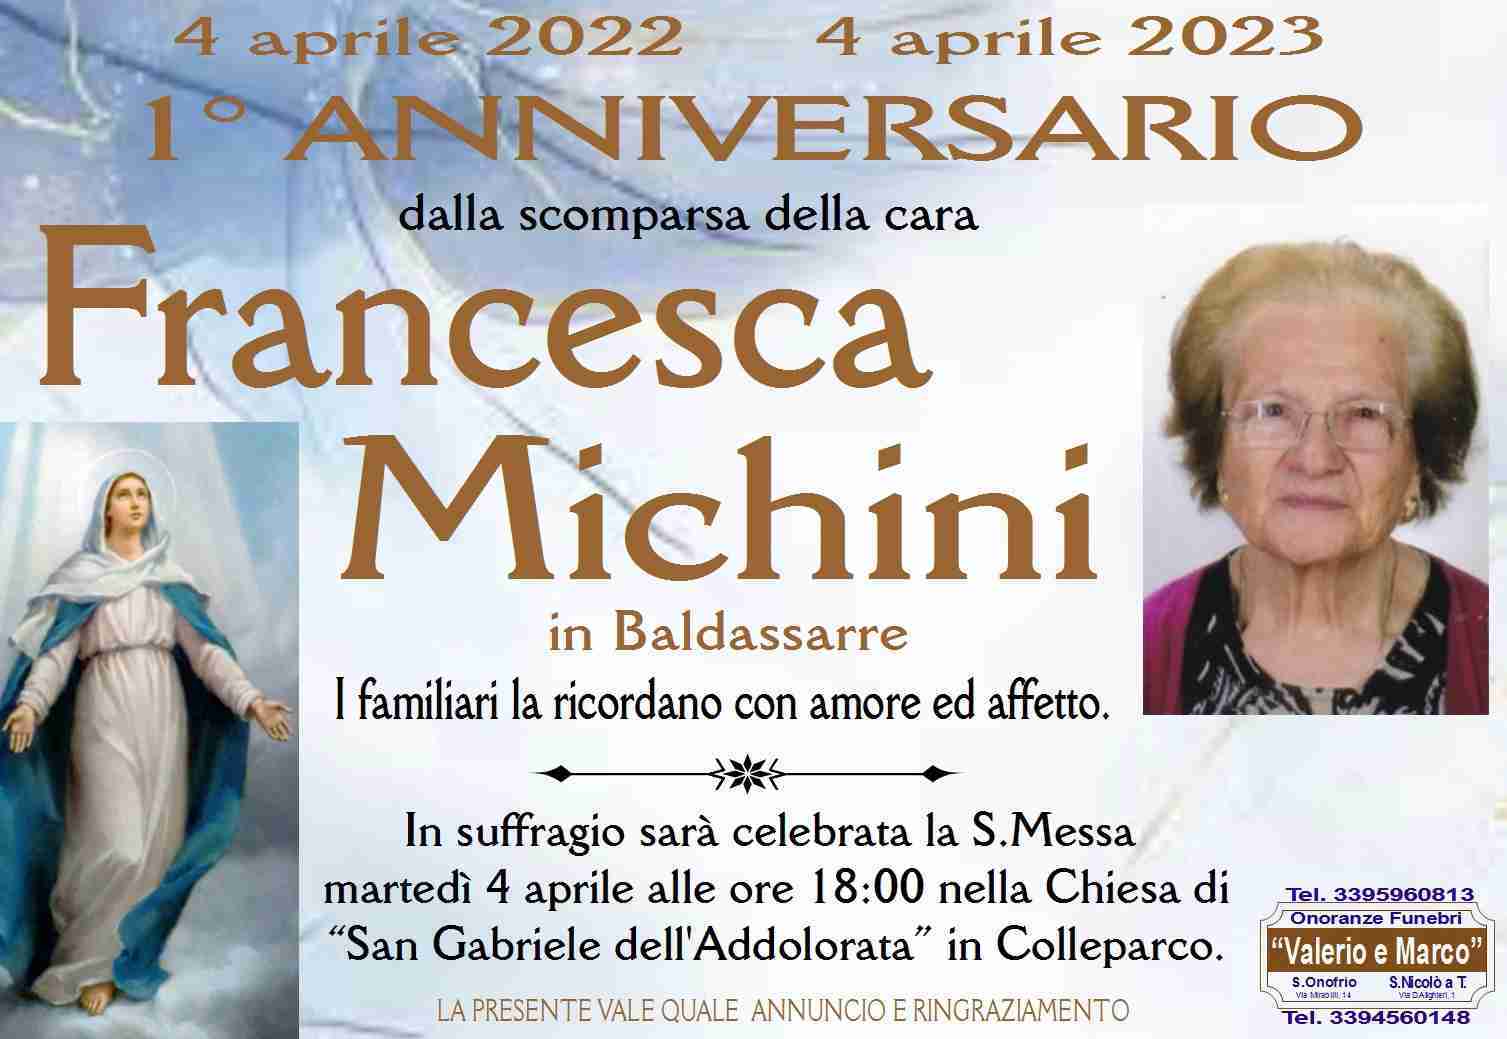 Francesca Michini